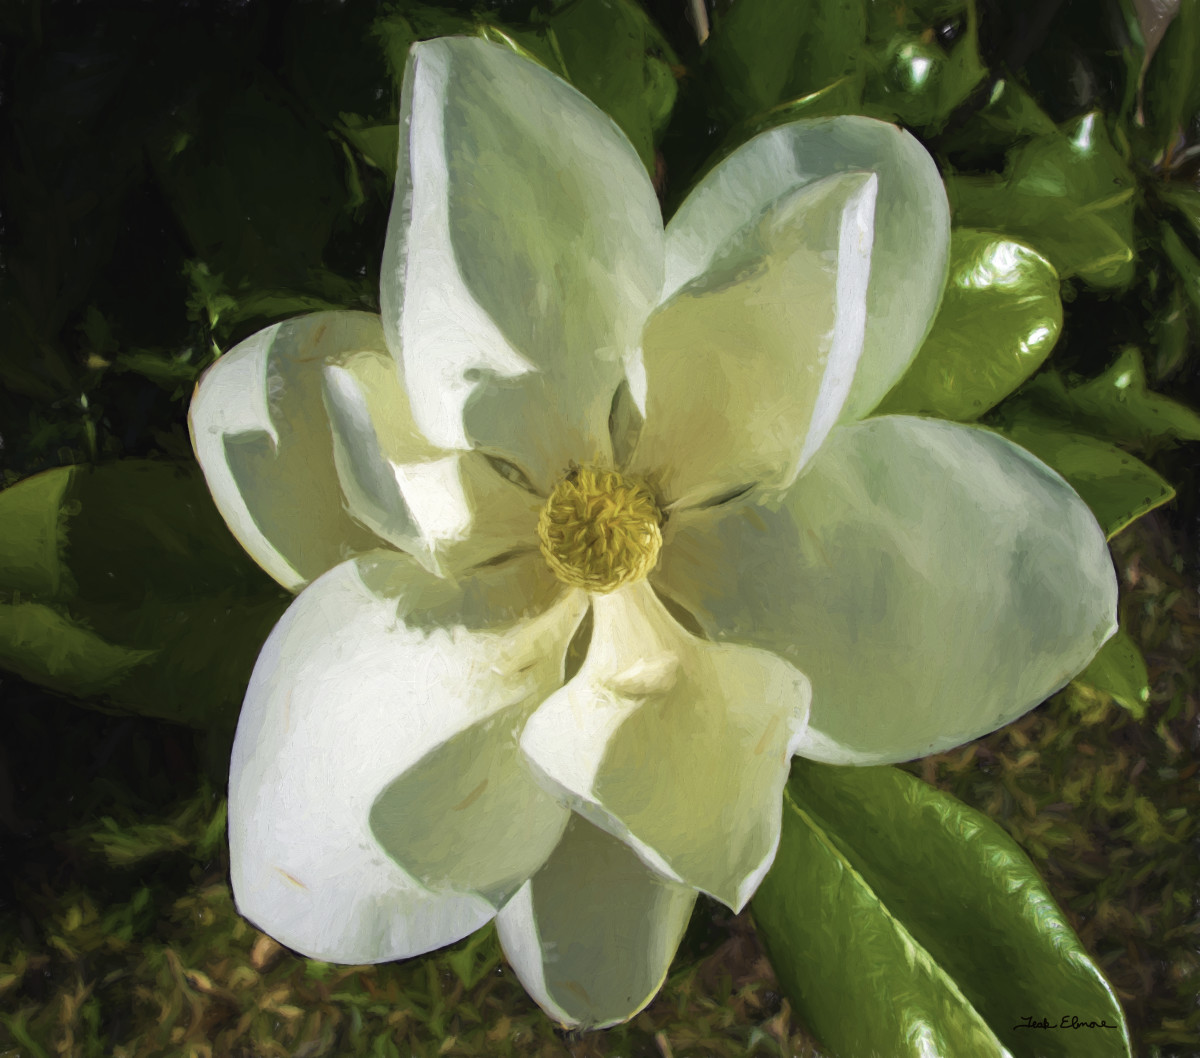 Magnificent Magnolia by teak elmore 